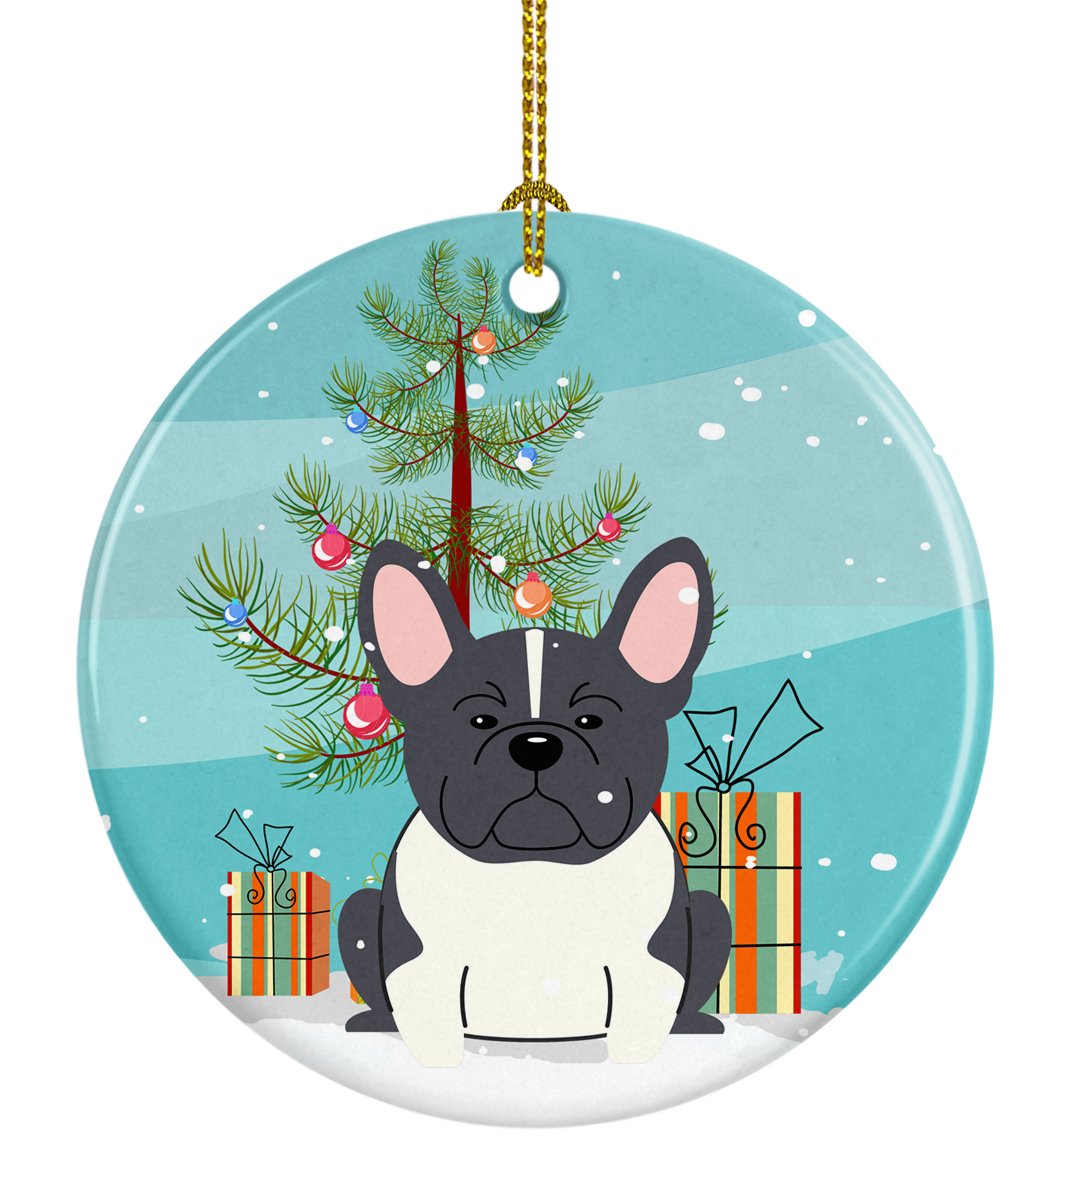 Merry Christmas Tree French Bulldog Black White Ceramic Ornament BB4137CO1 by Caroline's Treasures